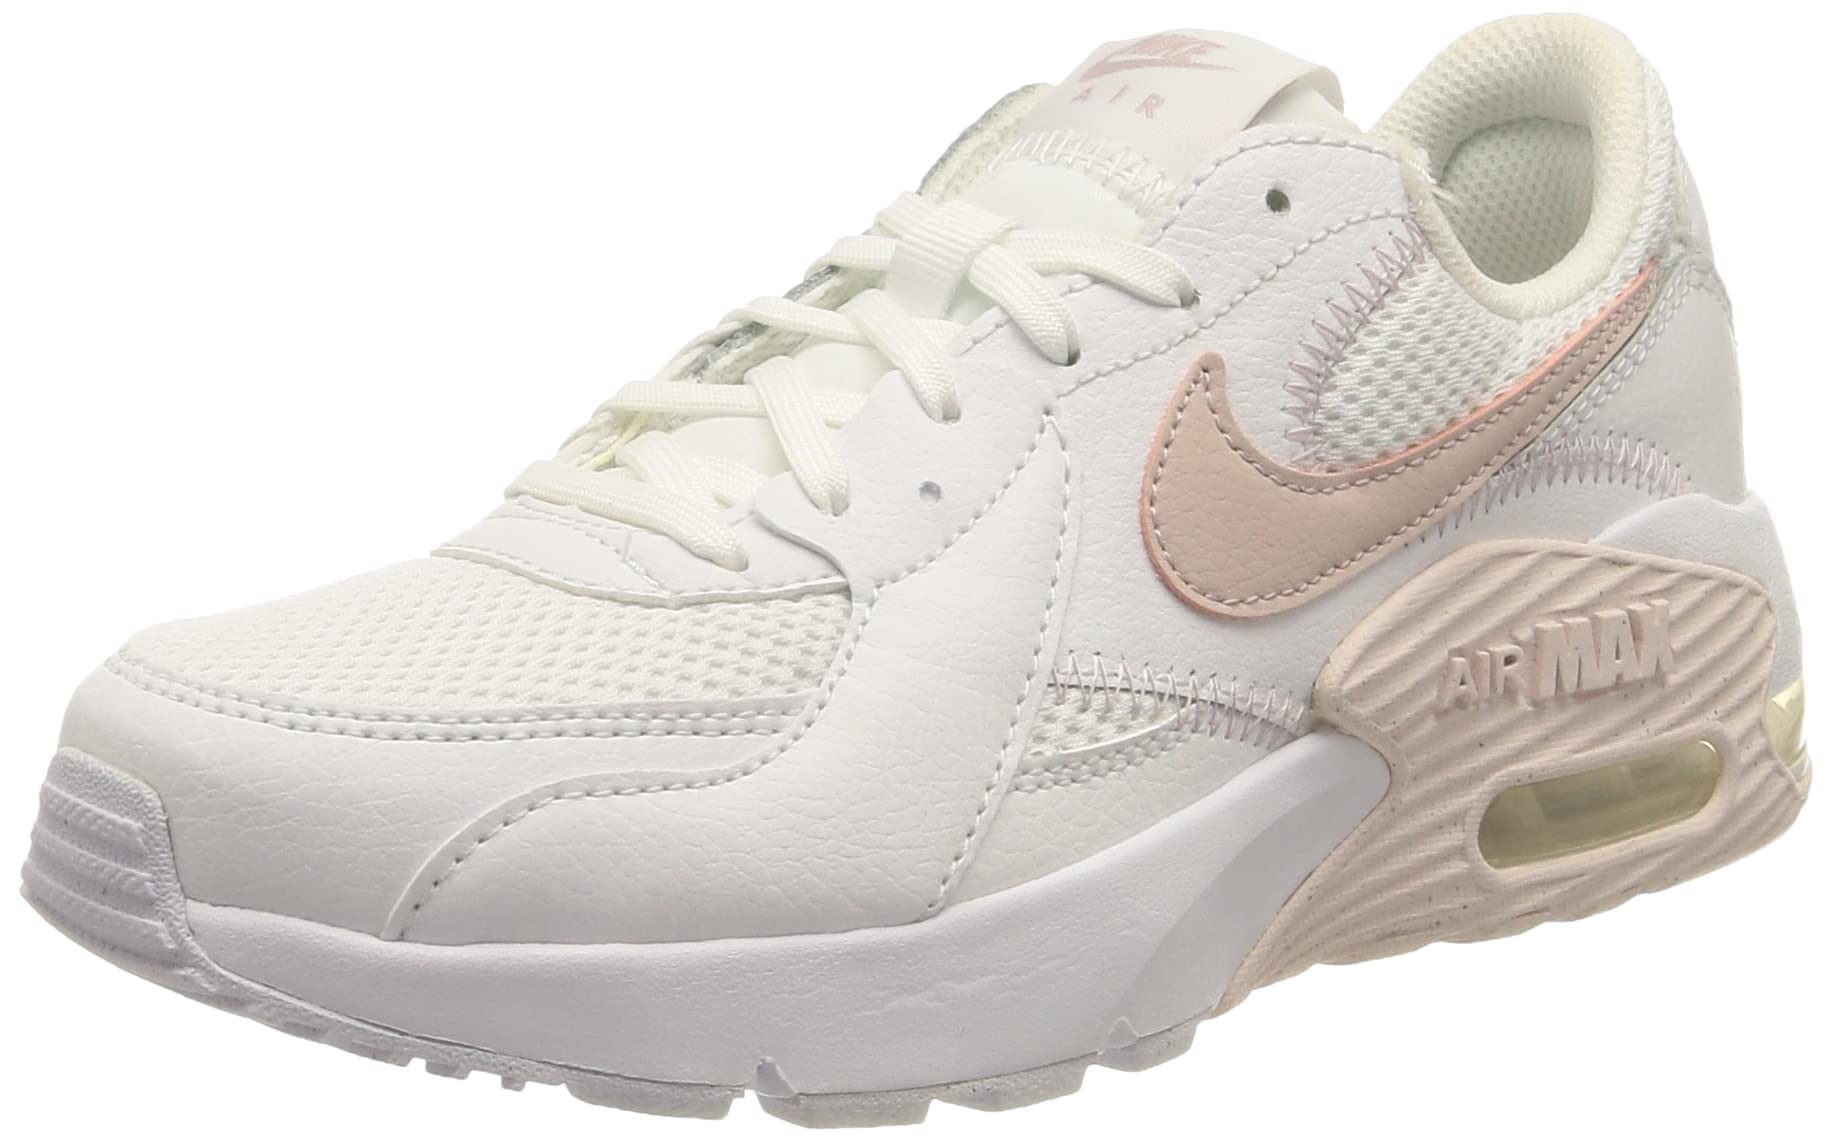 Pera persona erección Nike Women's WMNS Air Max Excee Running Shoe, White, 5.5 UK (7.5 US) -  Walmart.com